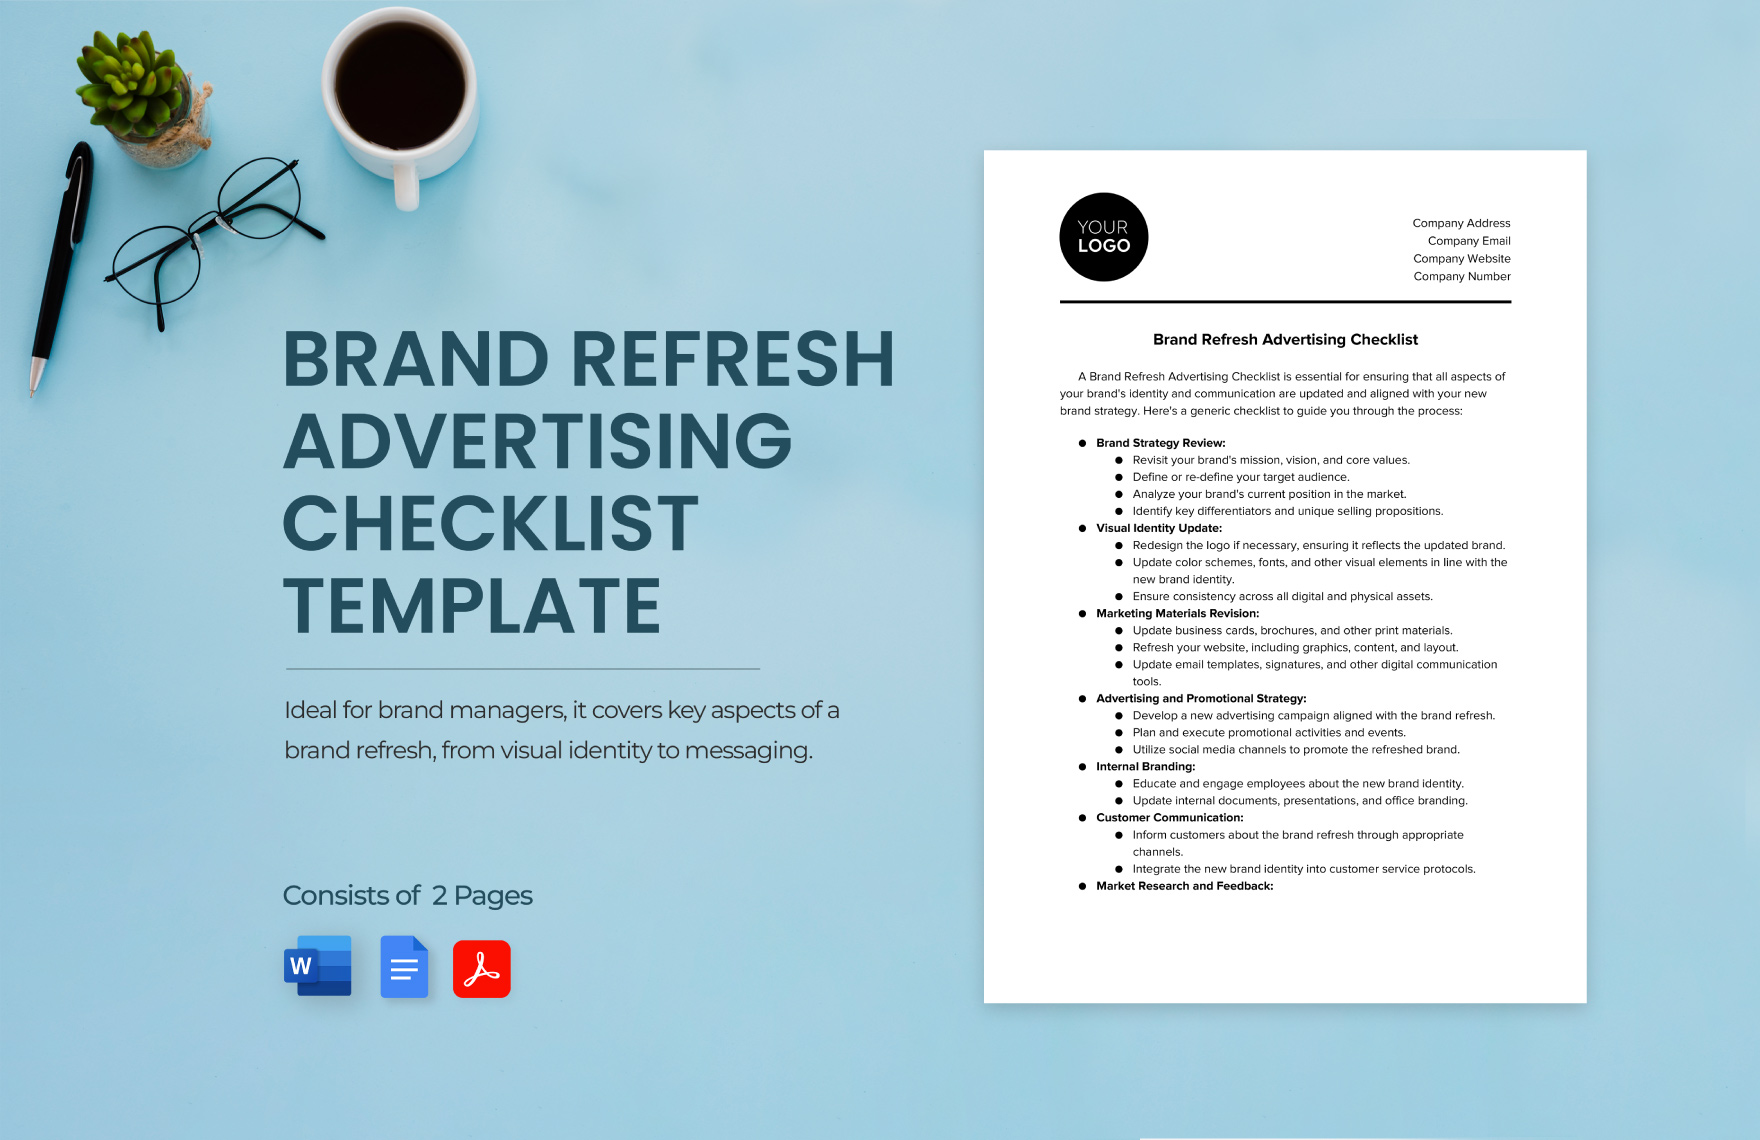 Brand Refresh Advertising Checklist Template